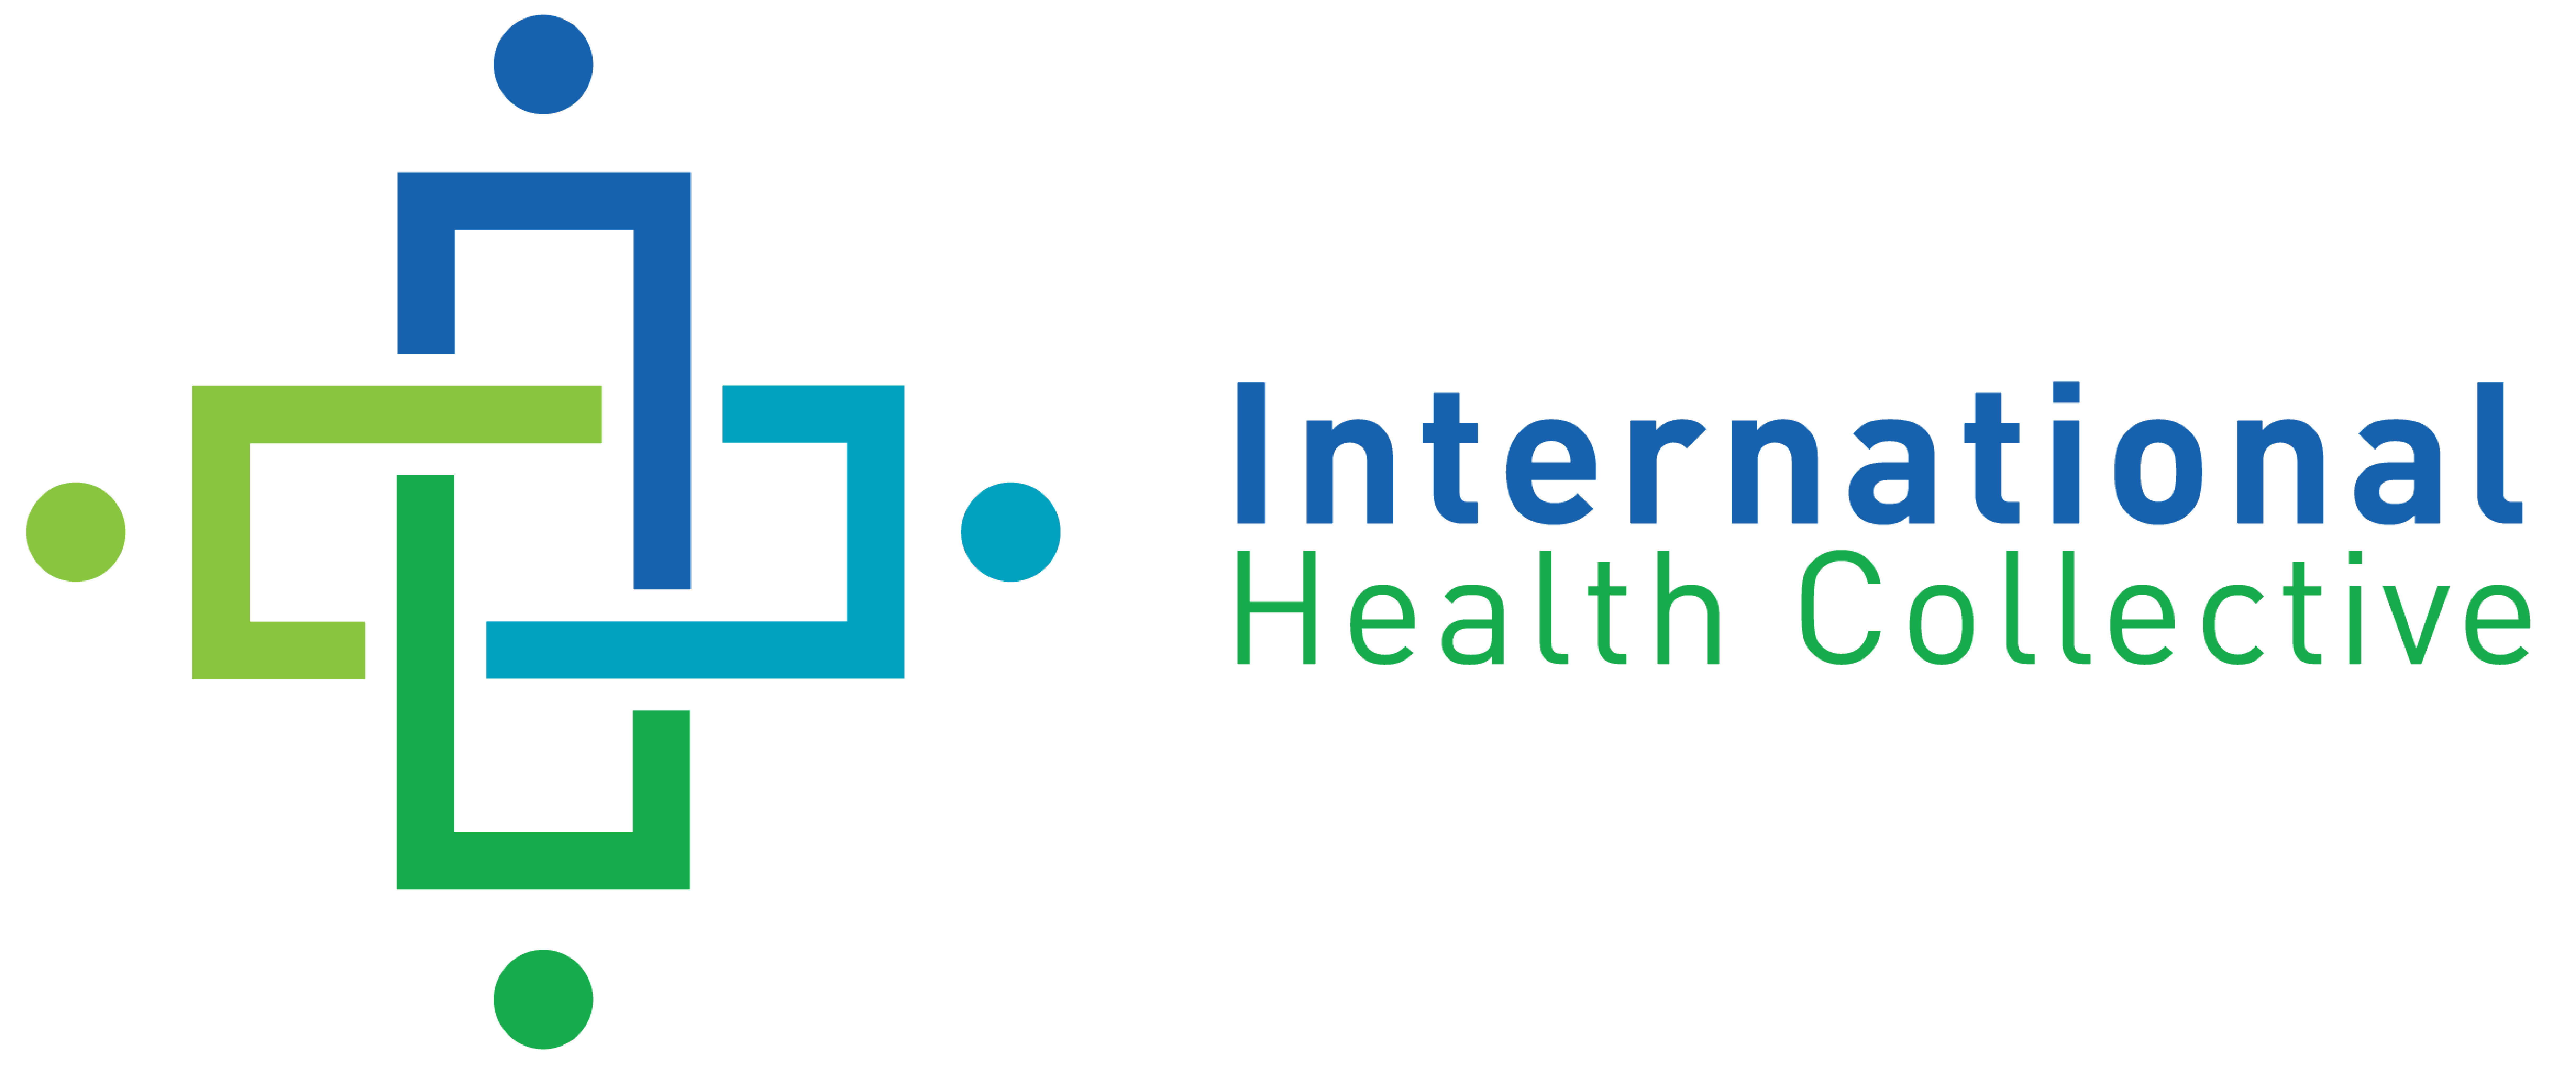 International Health Collective